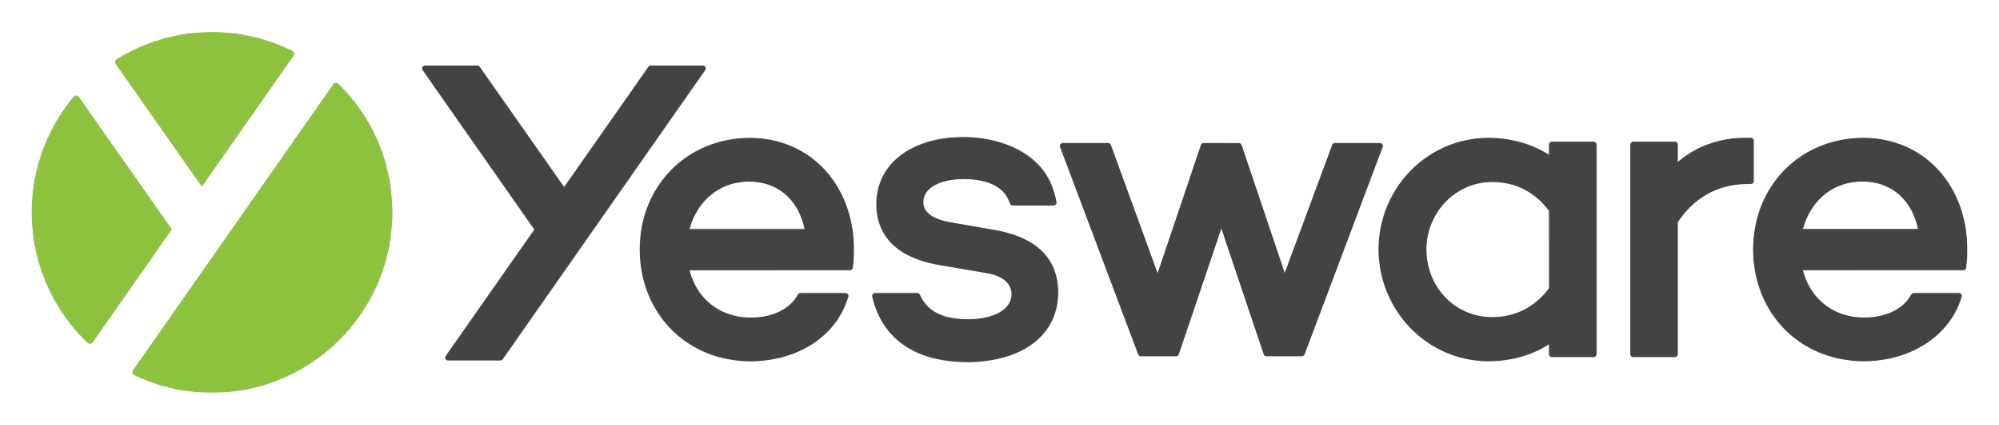 Yesware logo